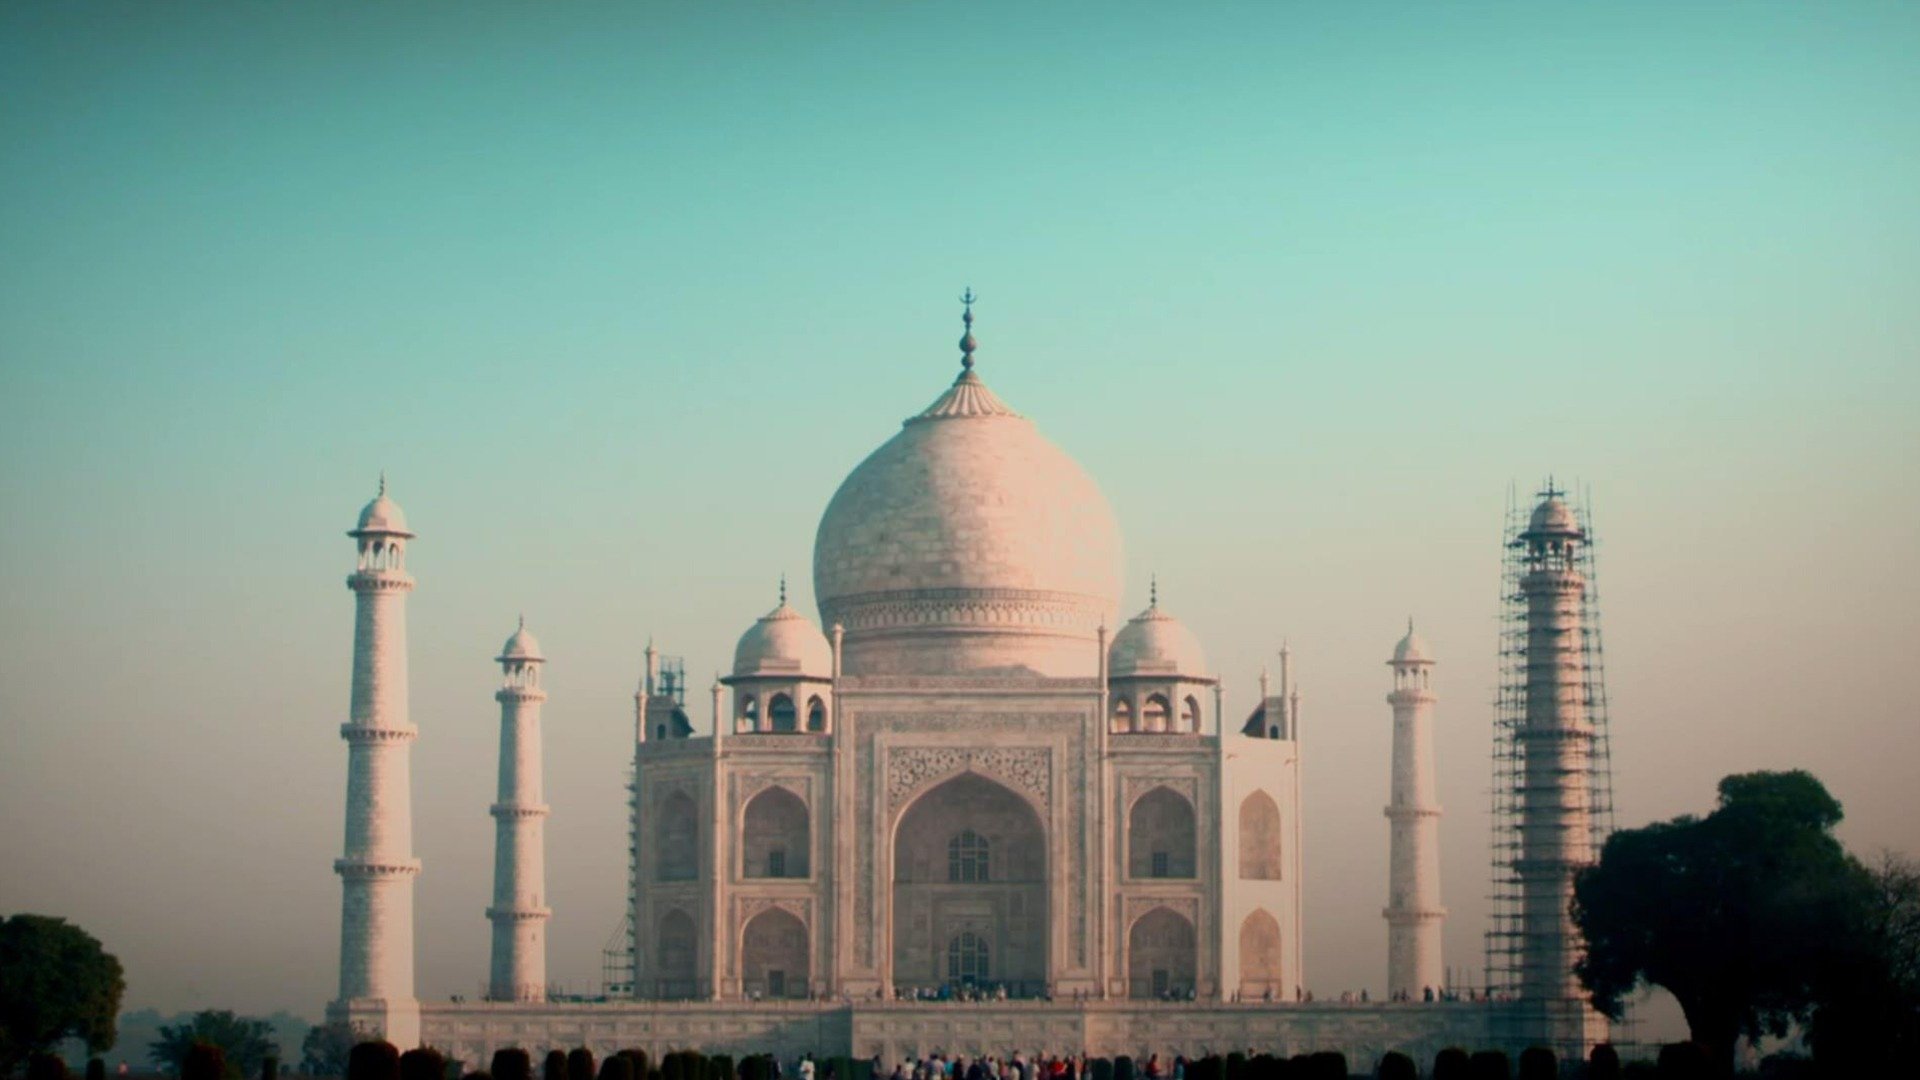 10. Sex, Lies, and the Taj Mahal